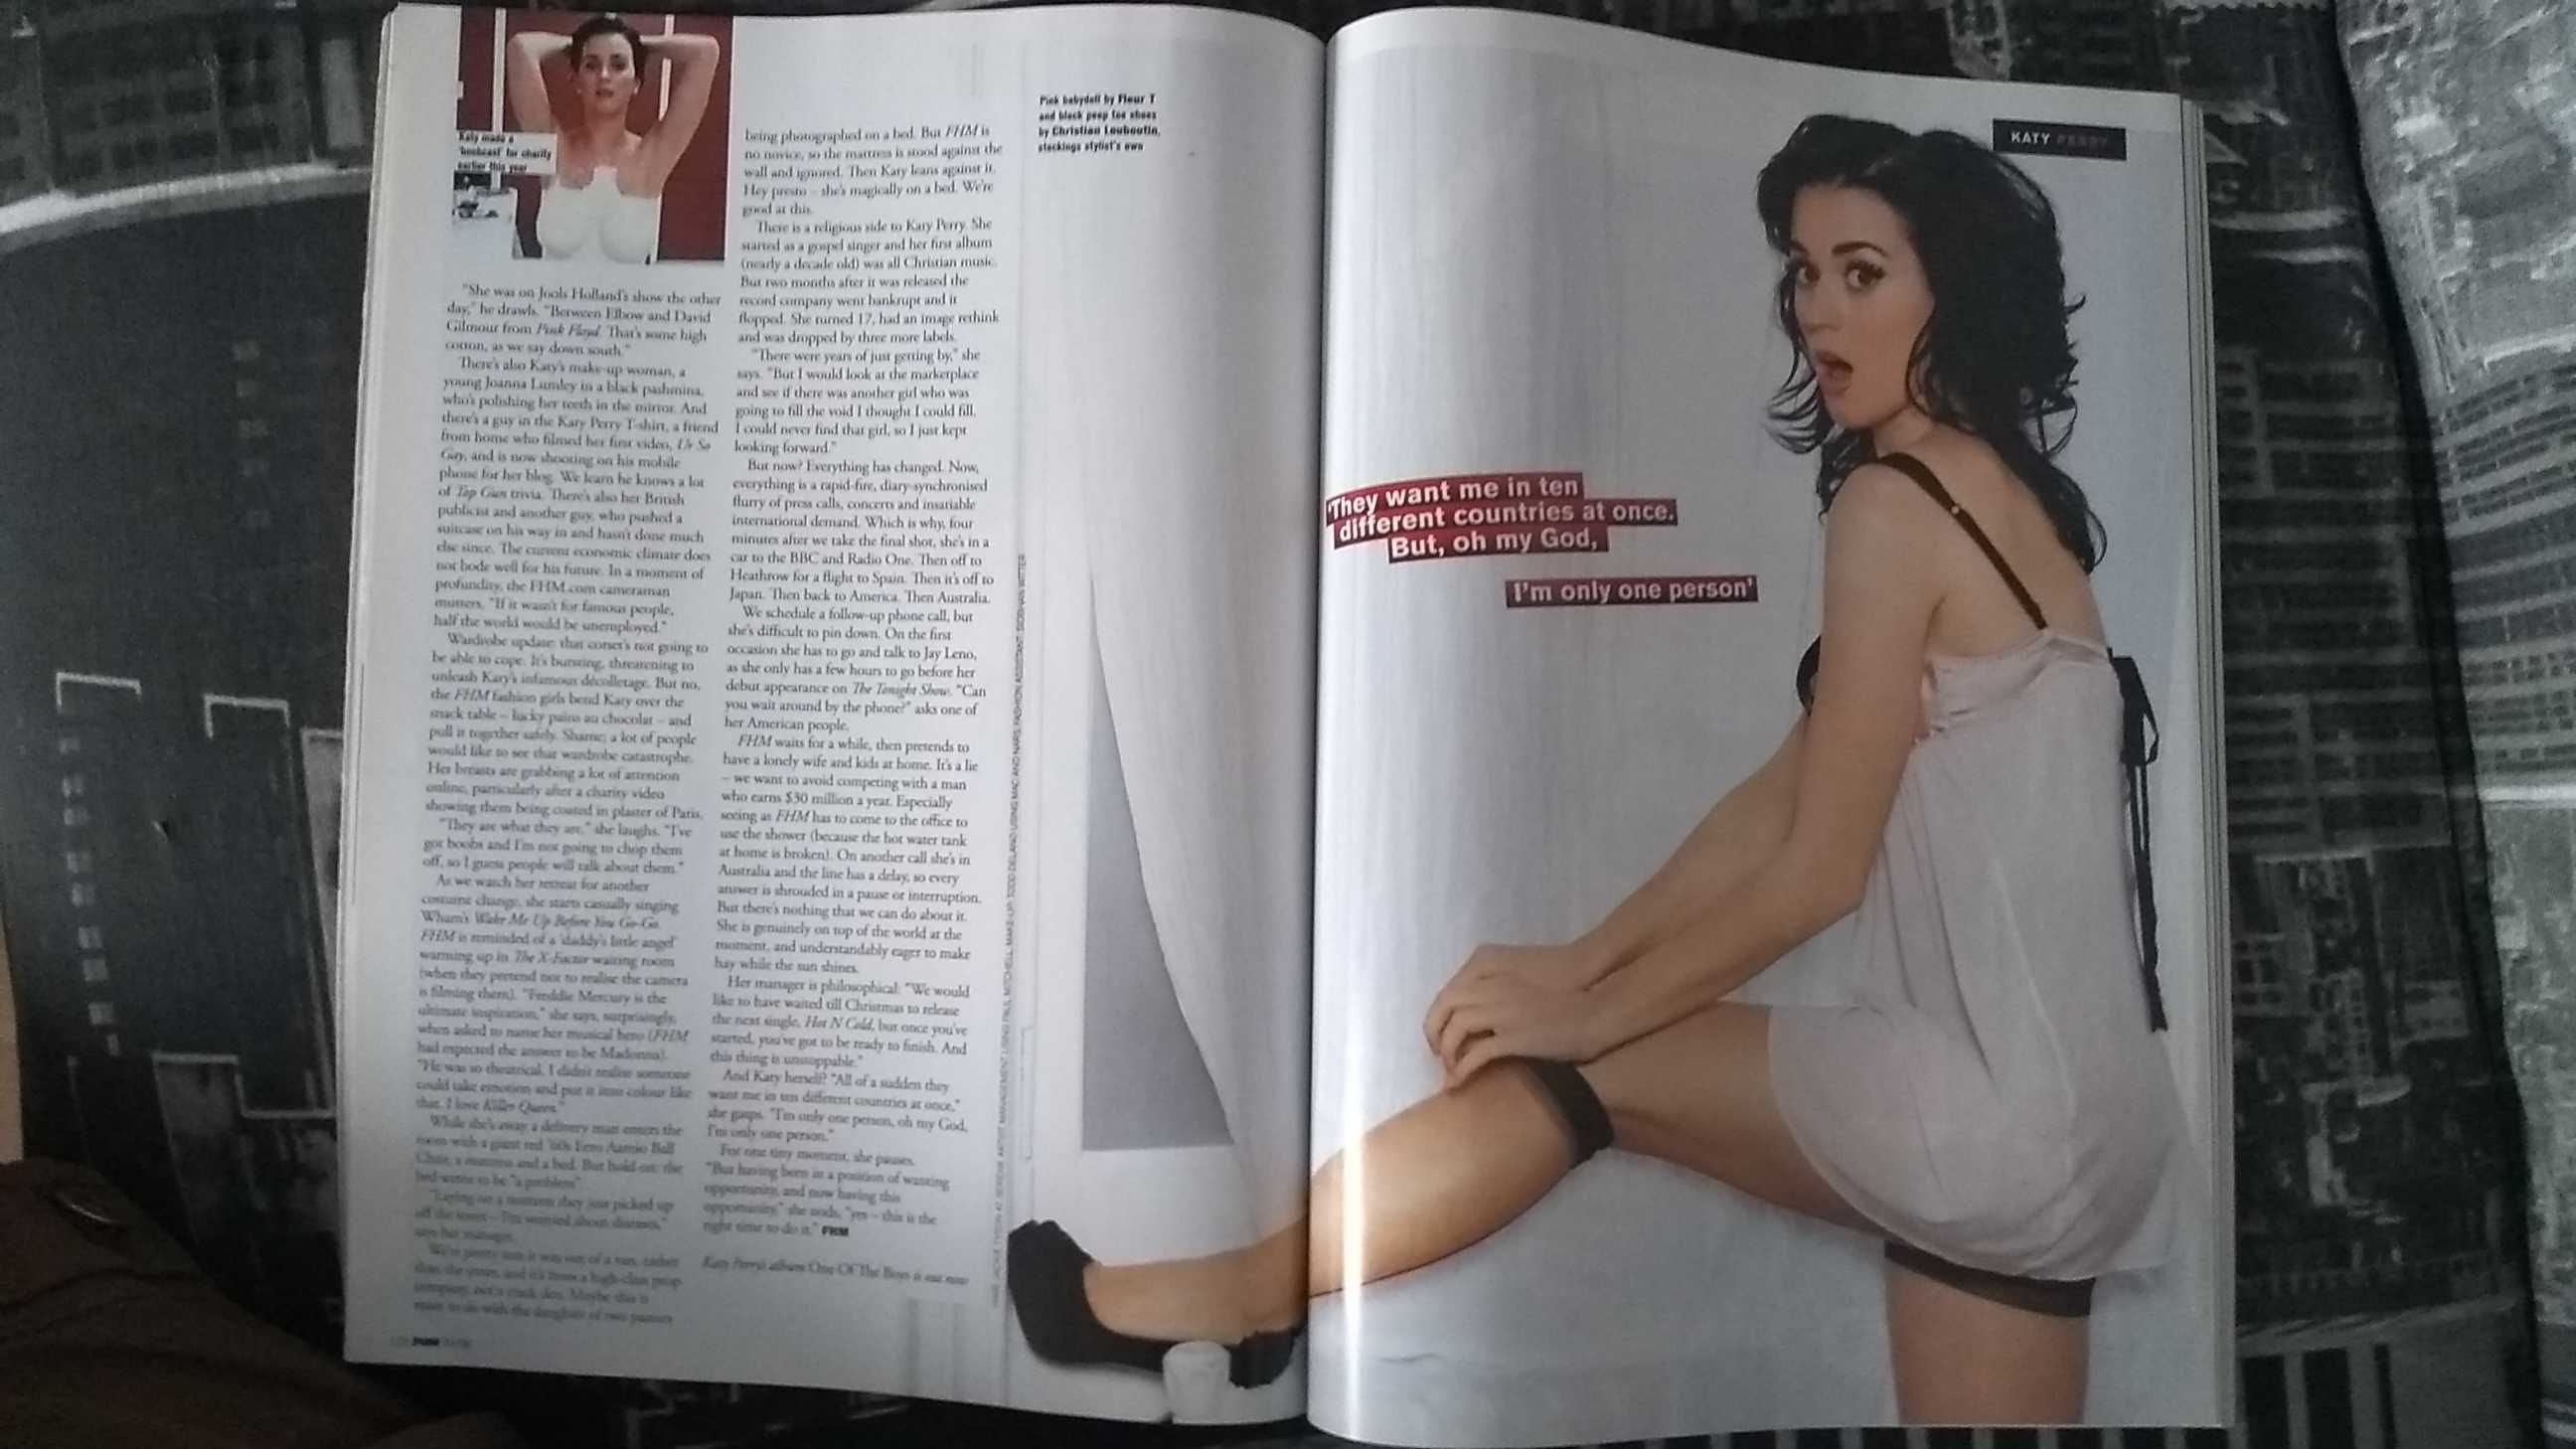 Katy Perry pocztówki unikaty z USA i 2 magazyny: FHM z UK i Vogue